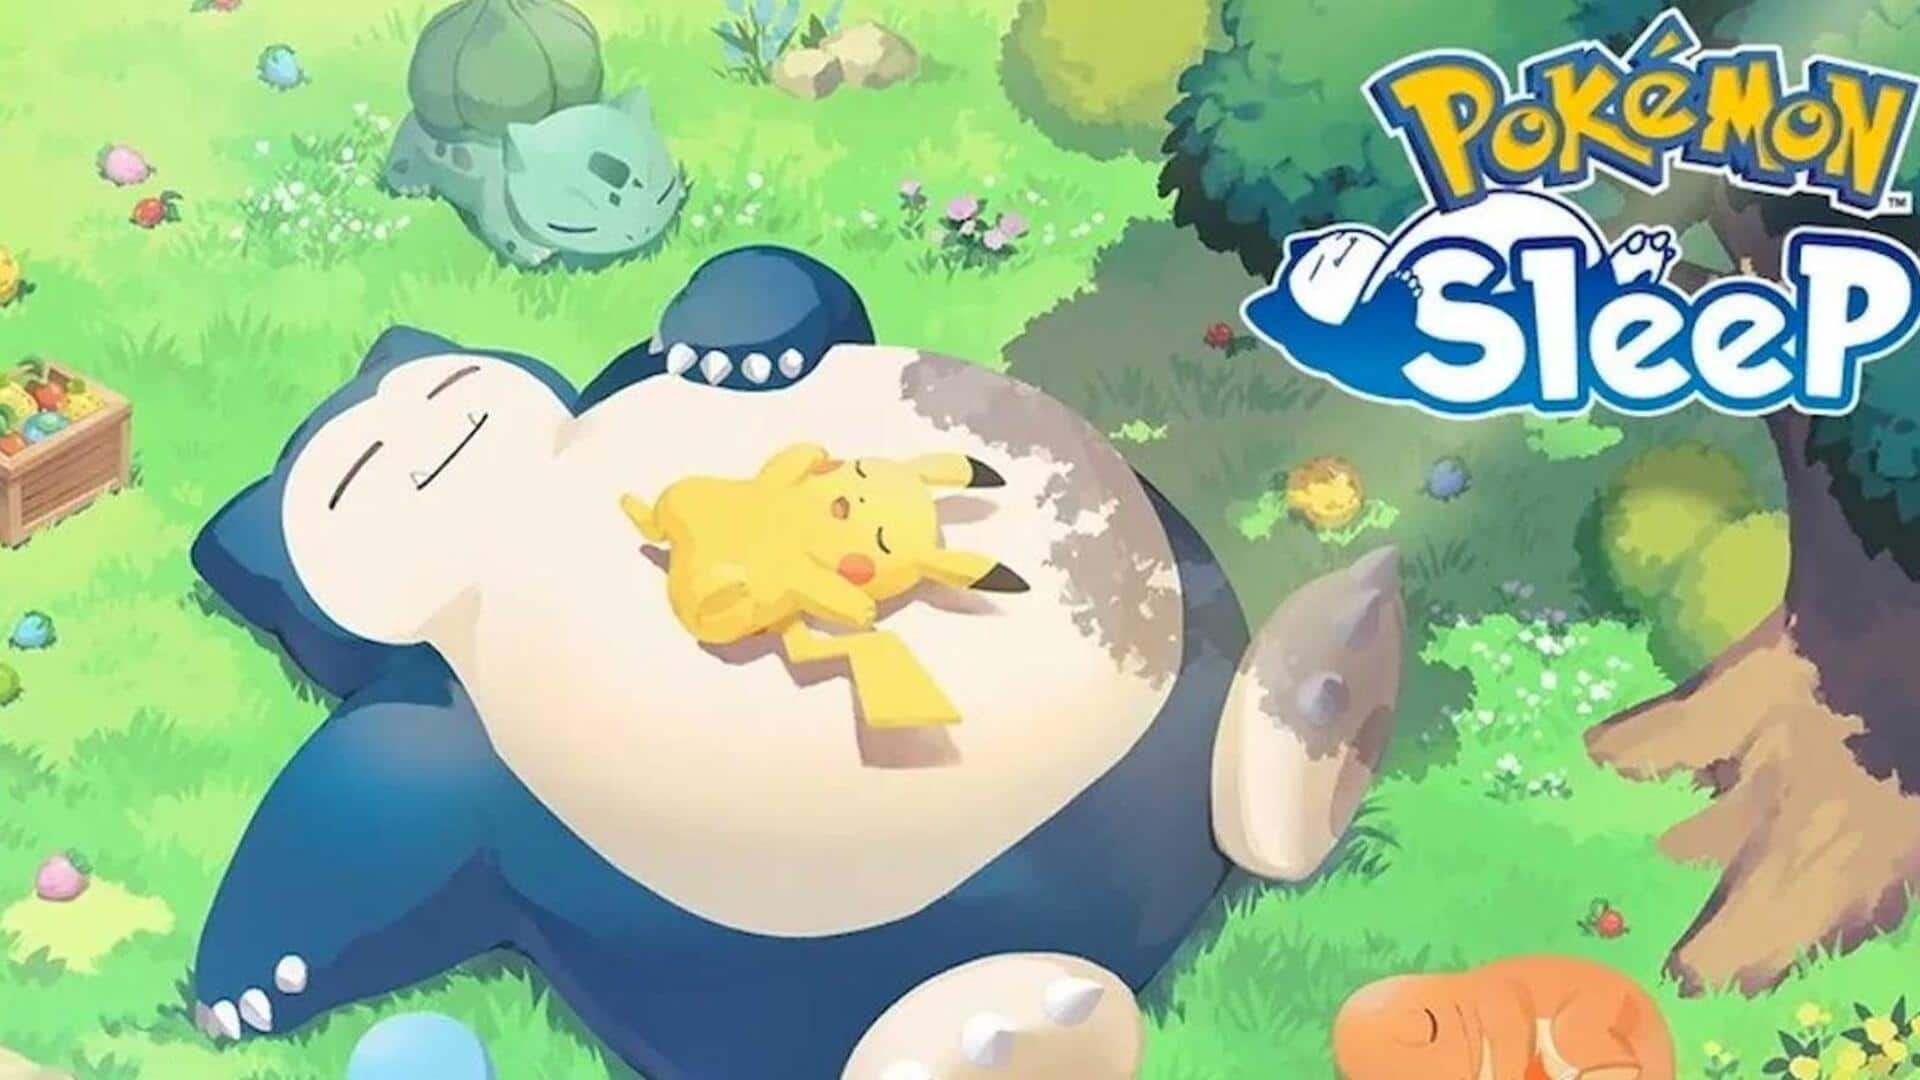 This Pokémon game involving sleep has hit 10 million downloads